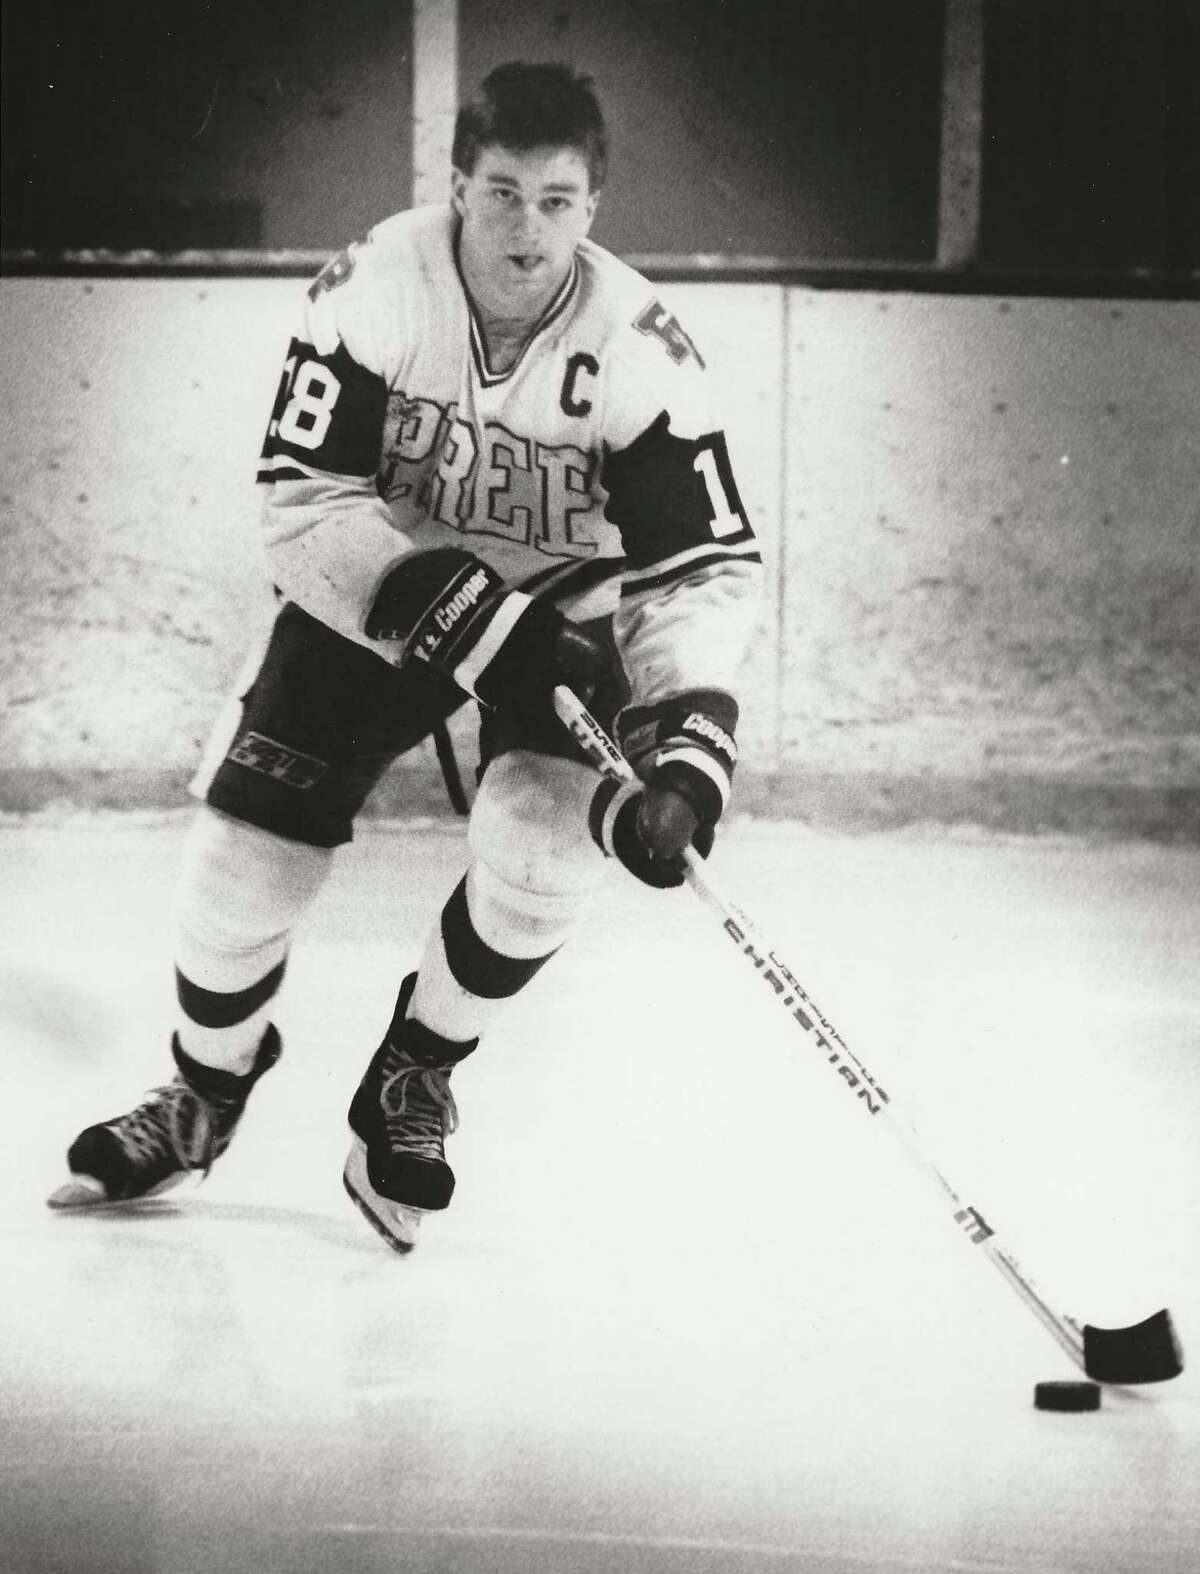 Ted Drury as a member of the Fairfield Prep ice hockey team.